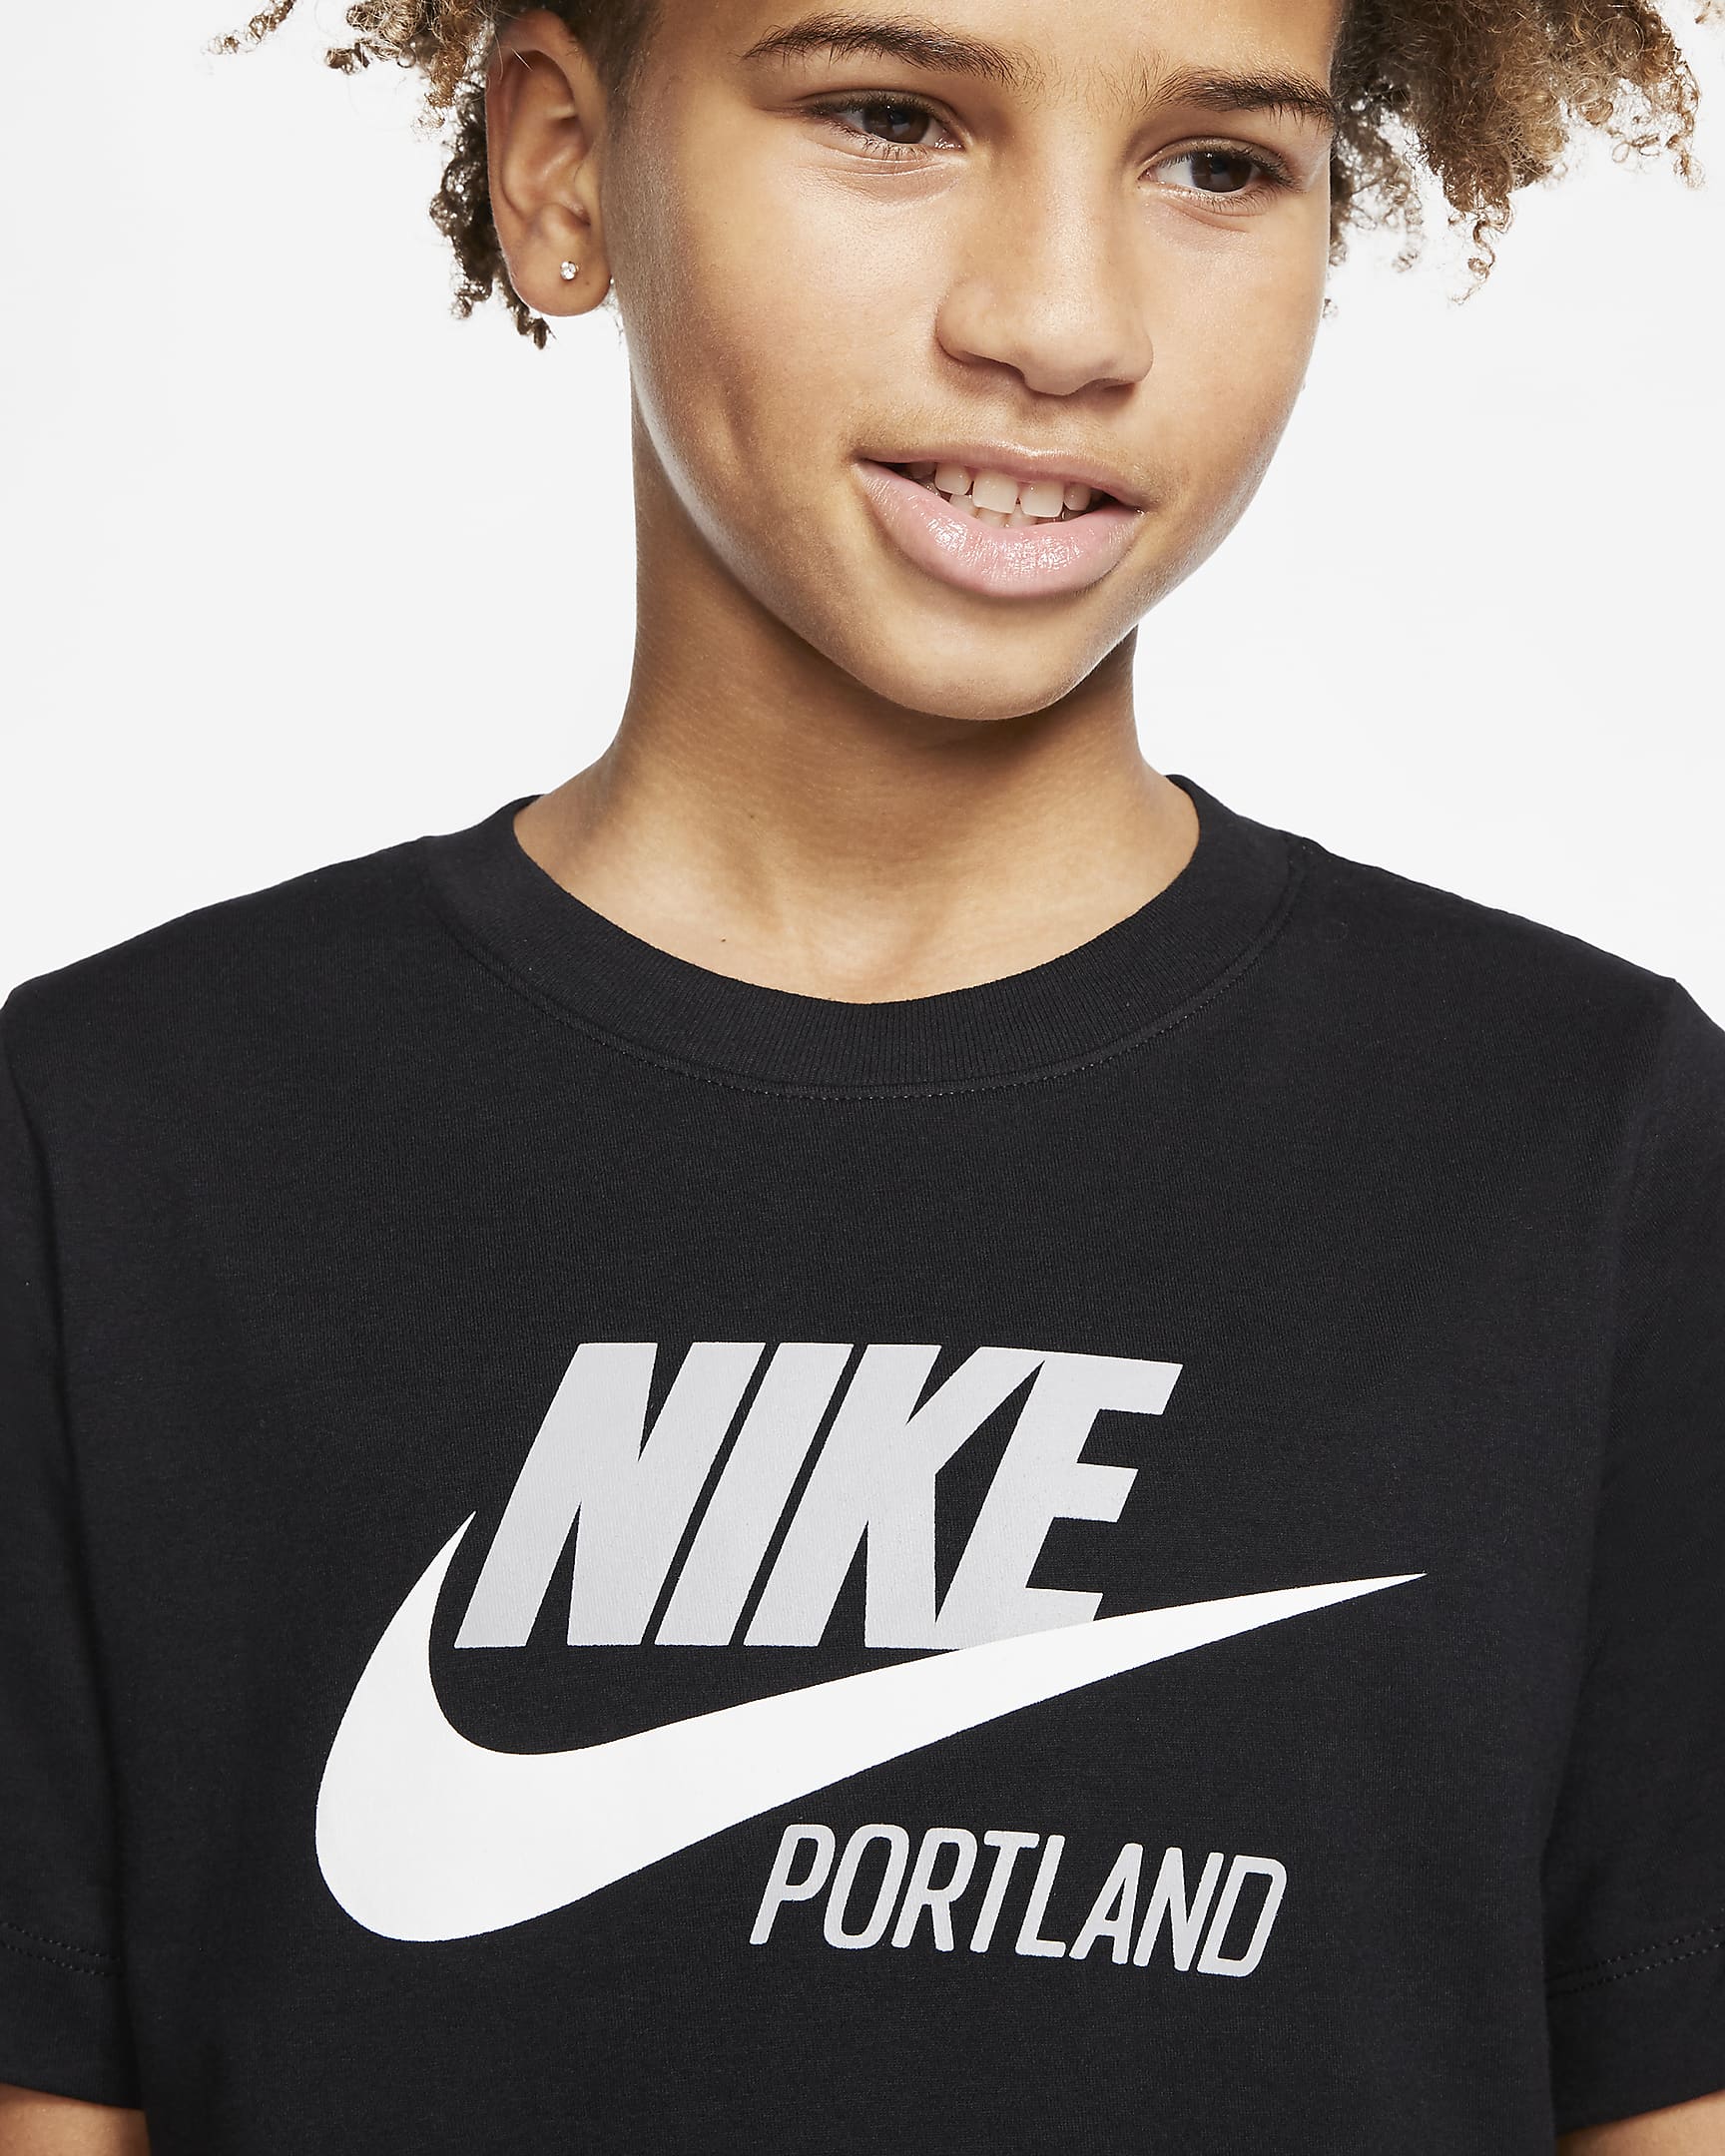 Nike Sportswear Portland Big Kids' T-Shirt. Nike.com